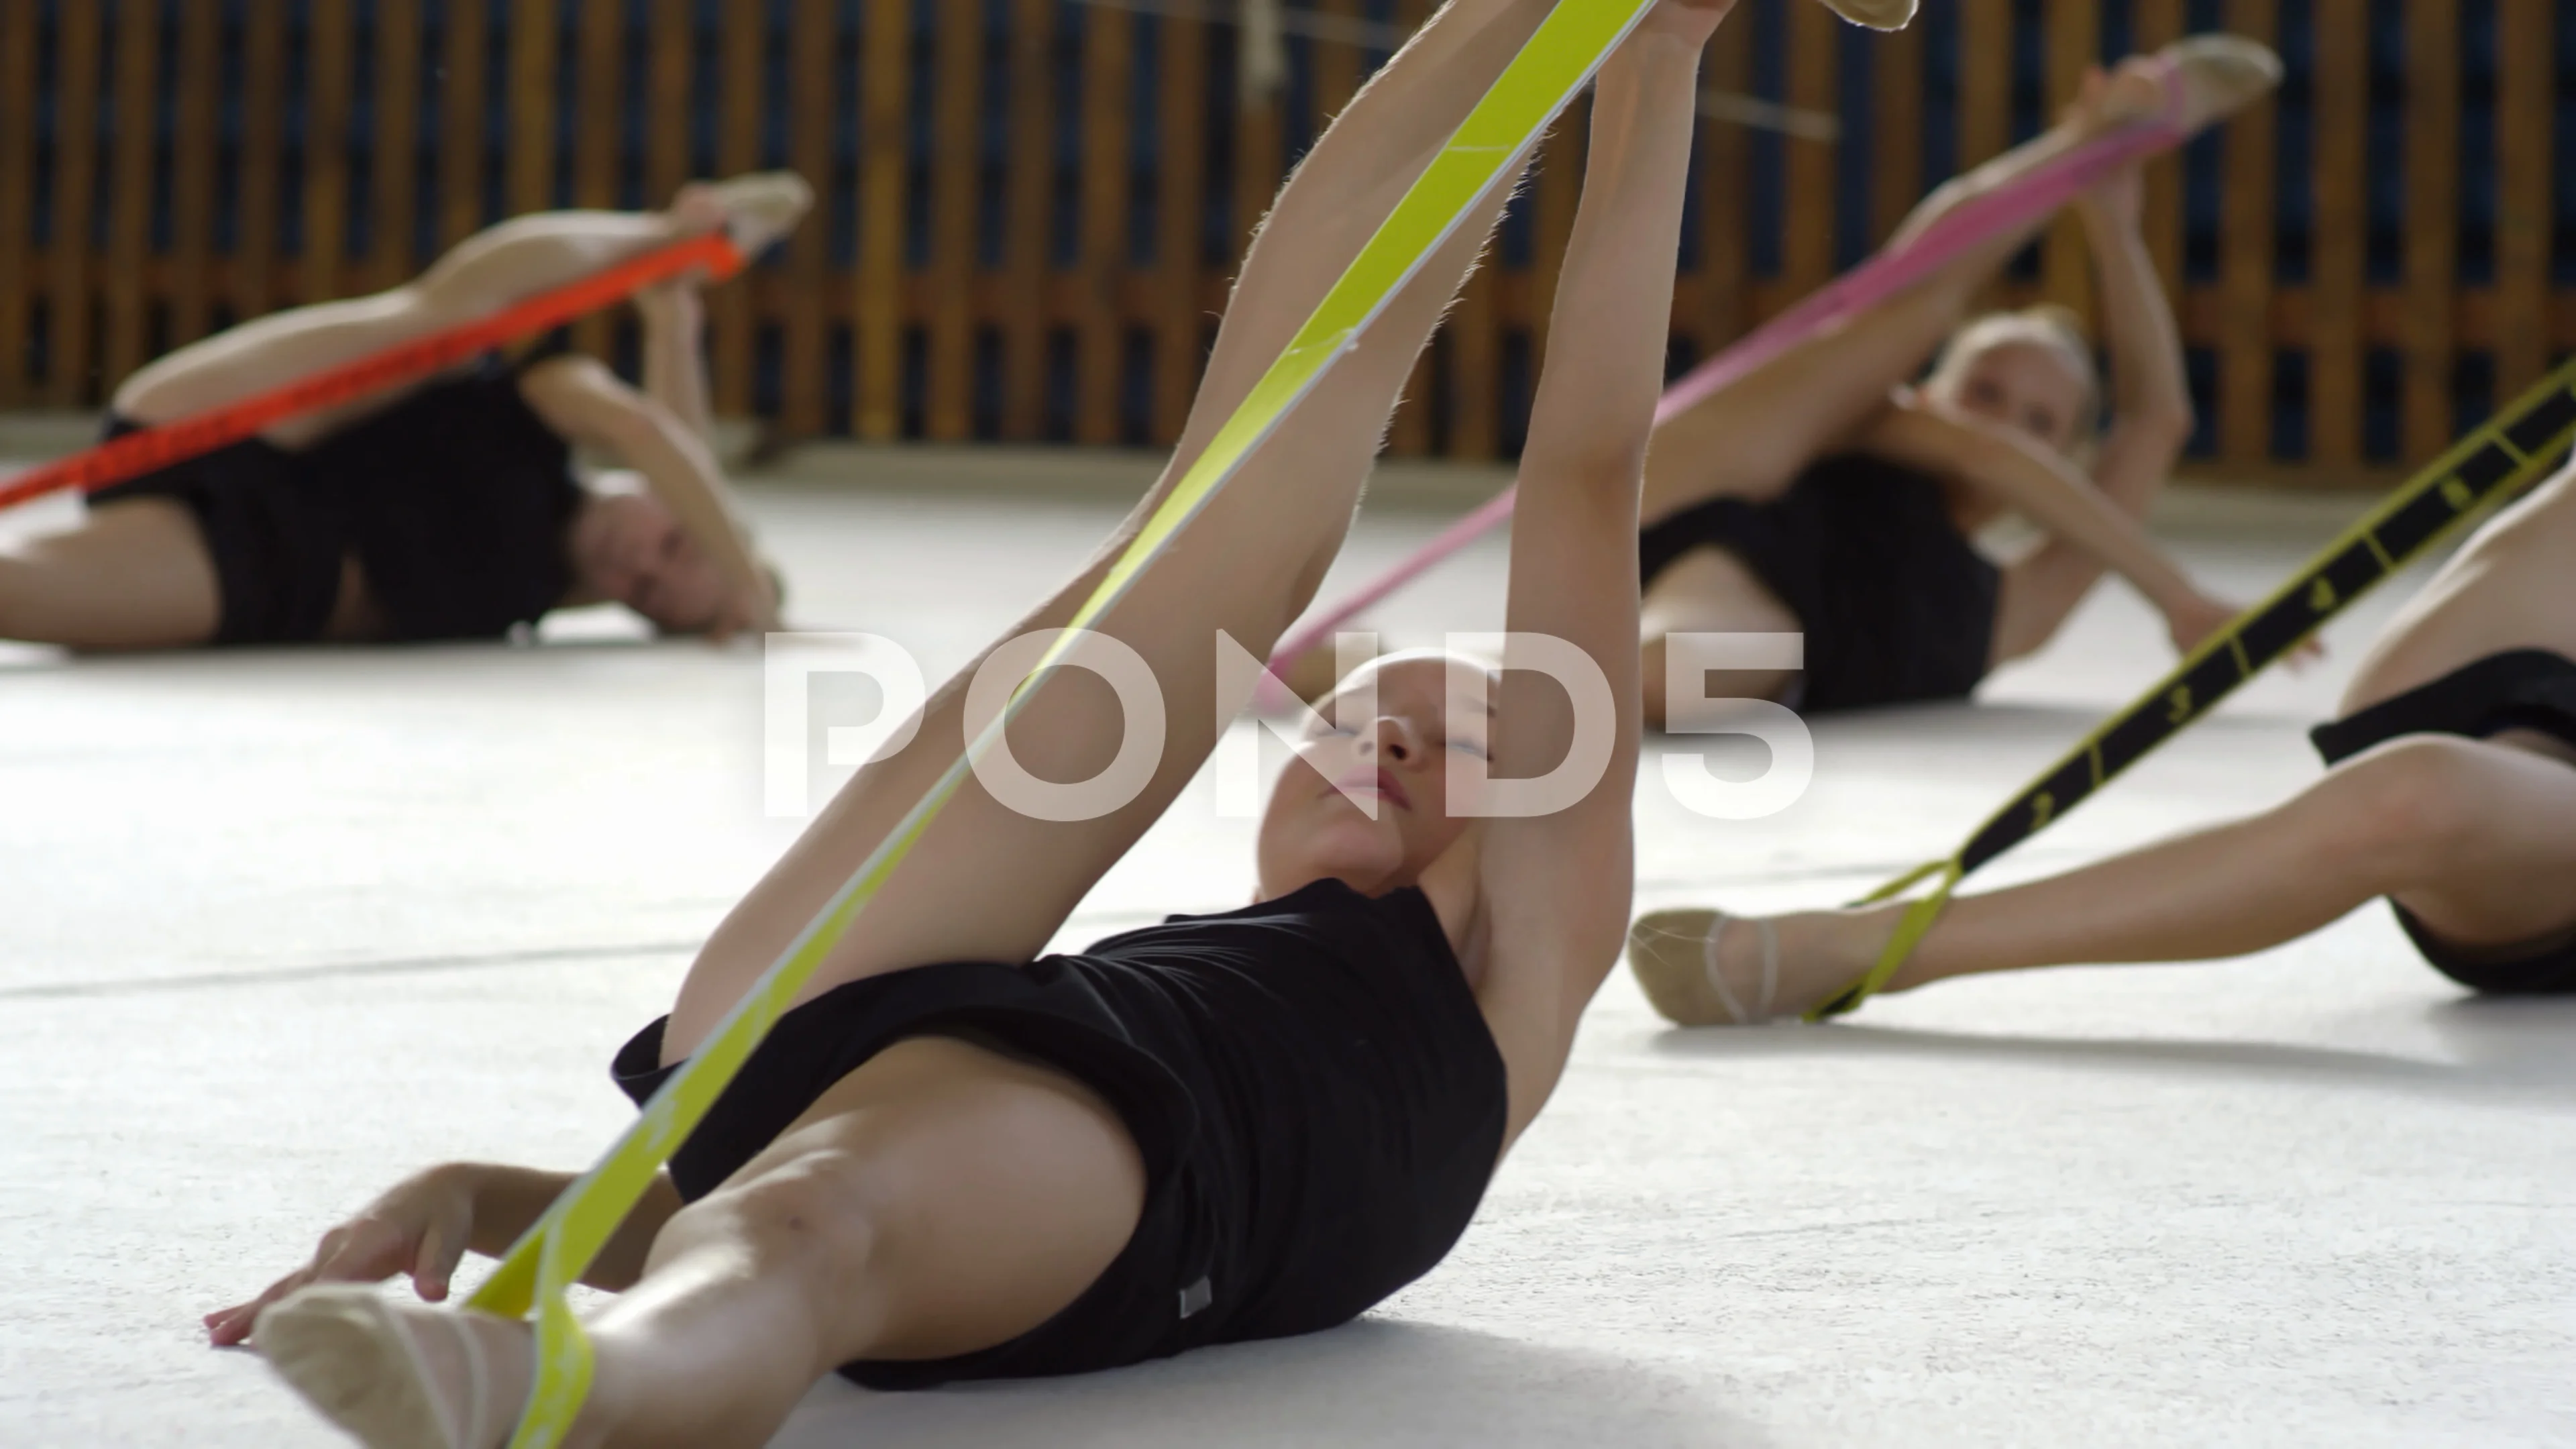 https://images.pond5.com/girls-stretching-legs-gymnastics-class-footage-105322657_prevstill.jpeg